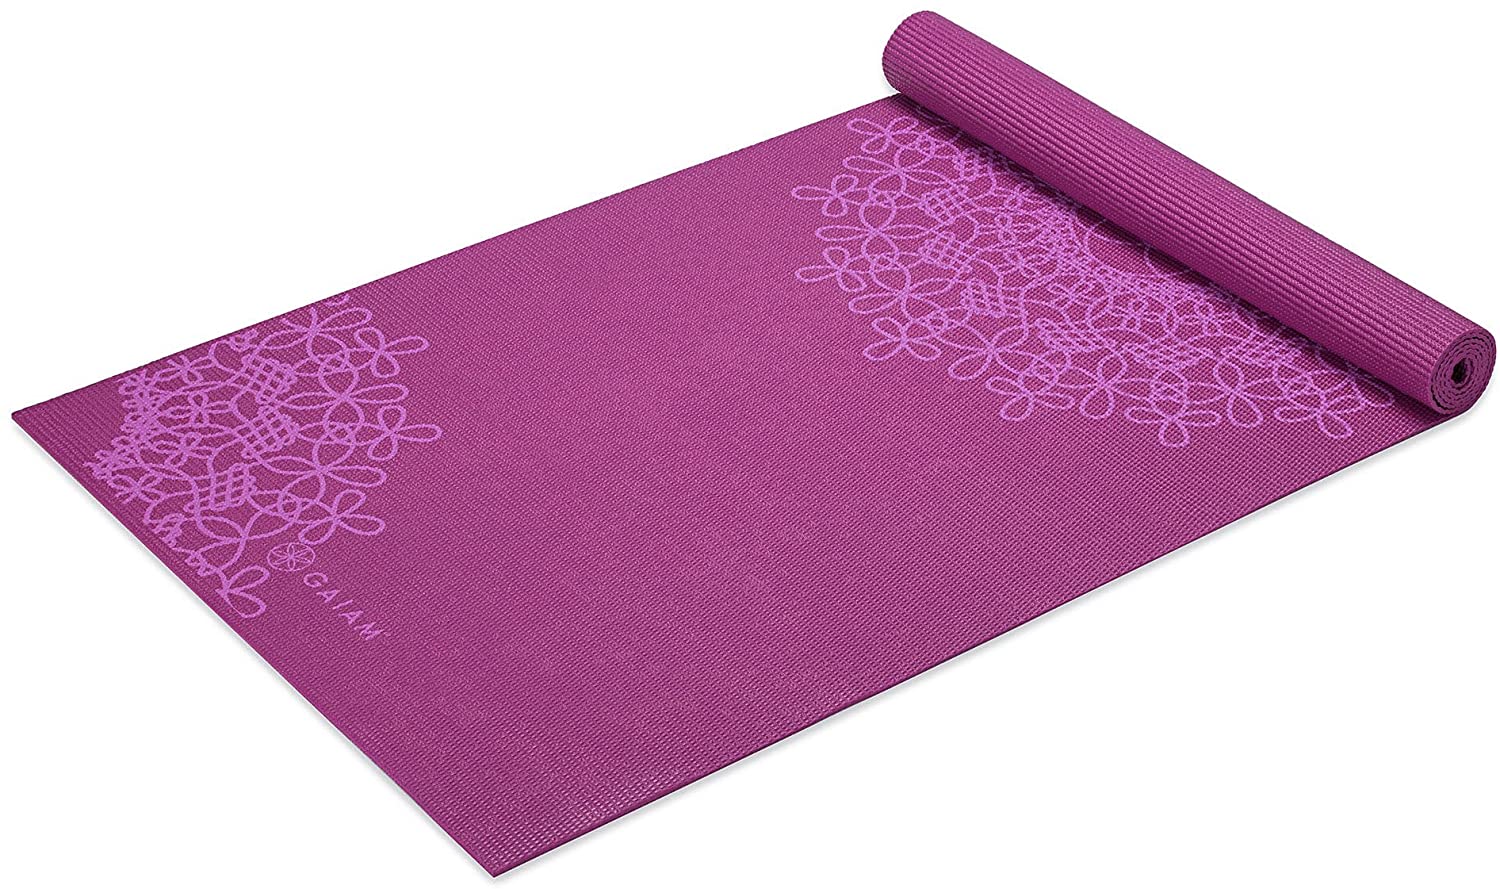 Wai Lana Esterilla de yoga y pilates (pluma de pavo real, púrpura) - 1/4 de  pulgada extra gruesa antideslizante elegante, sin látex, ligera, comodidad